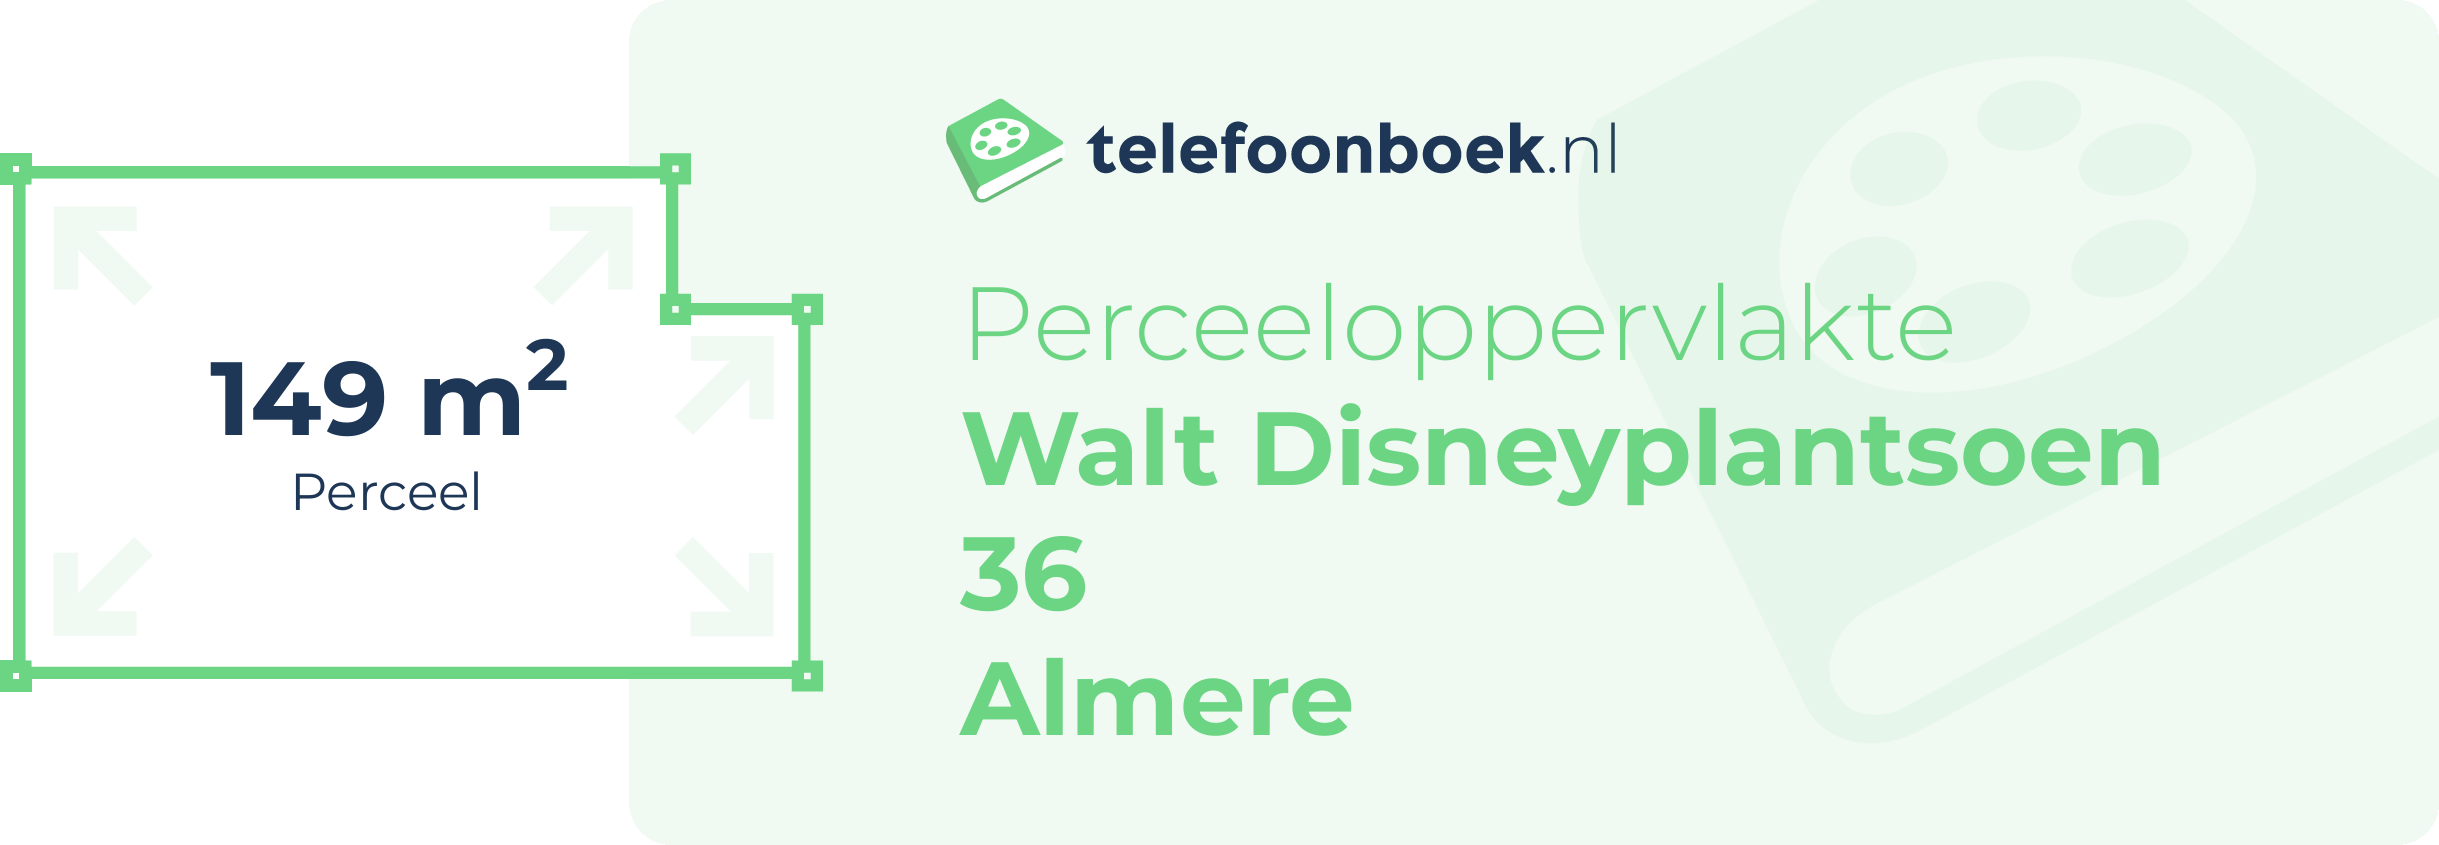 Perceeloppervlakte Walt Disneyplantsoen 36 Almere